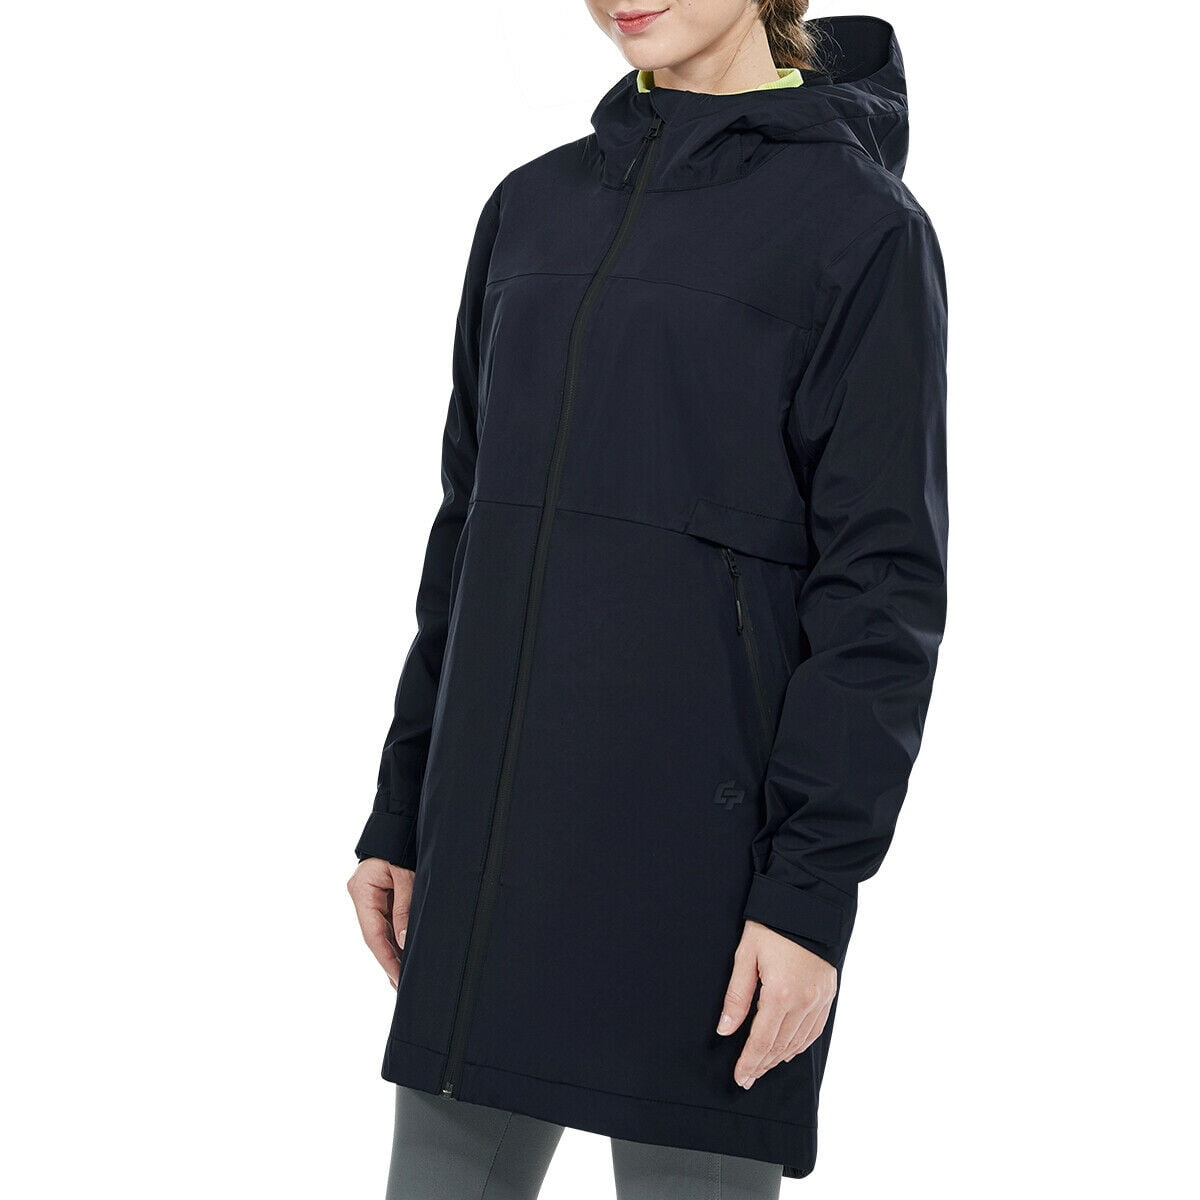 Ladies BHS Shower Proof Raincoat Jacket Belt Waterproof Navy Coat 